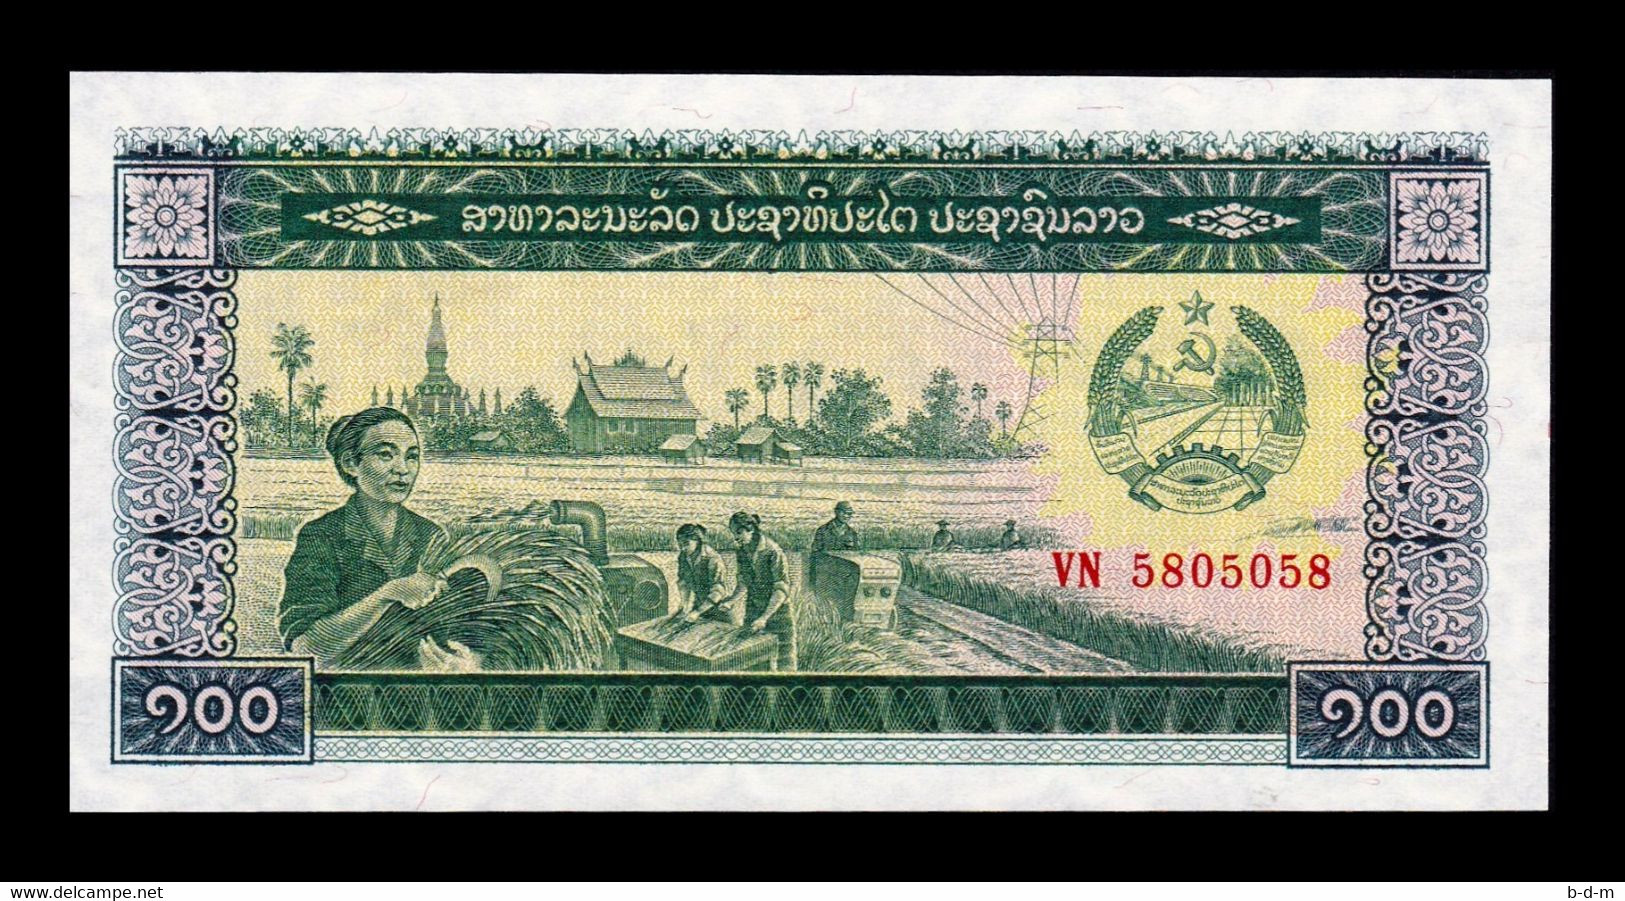 Laos Lao Lot Bundle 100 Banknotes 100 Kip 1979 Pick 30 SC UNC - Laos